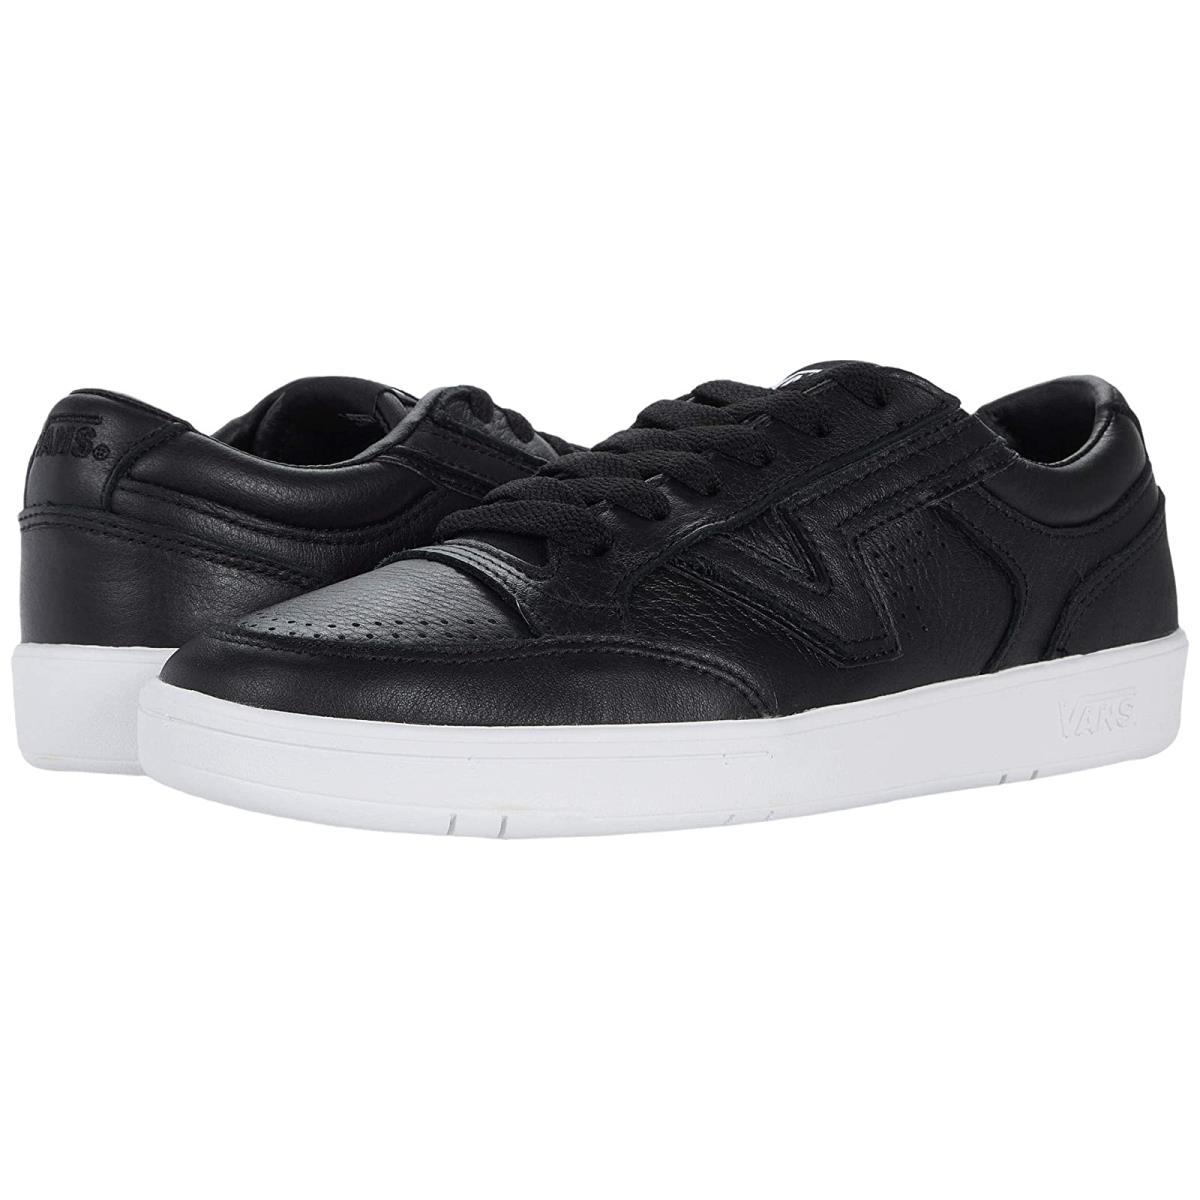 Unisex Sneakers Athletic Shoes Vans Lowland CC (Leather) Black/True White